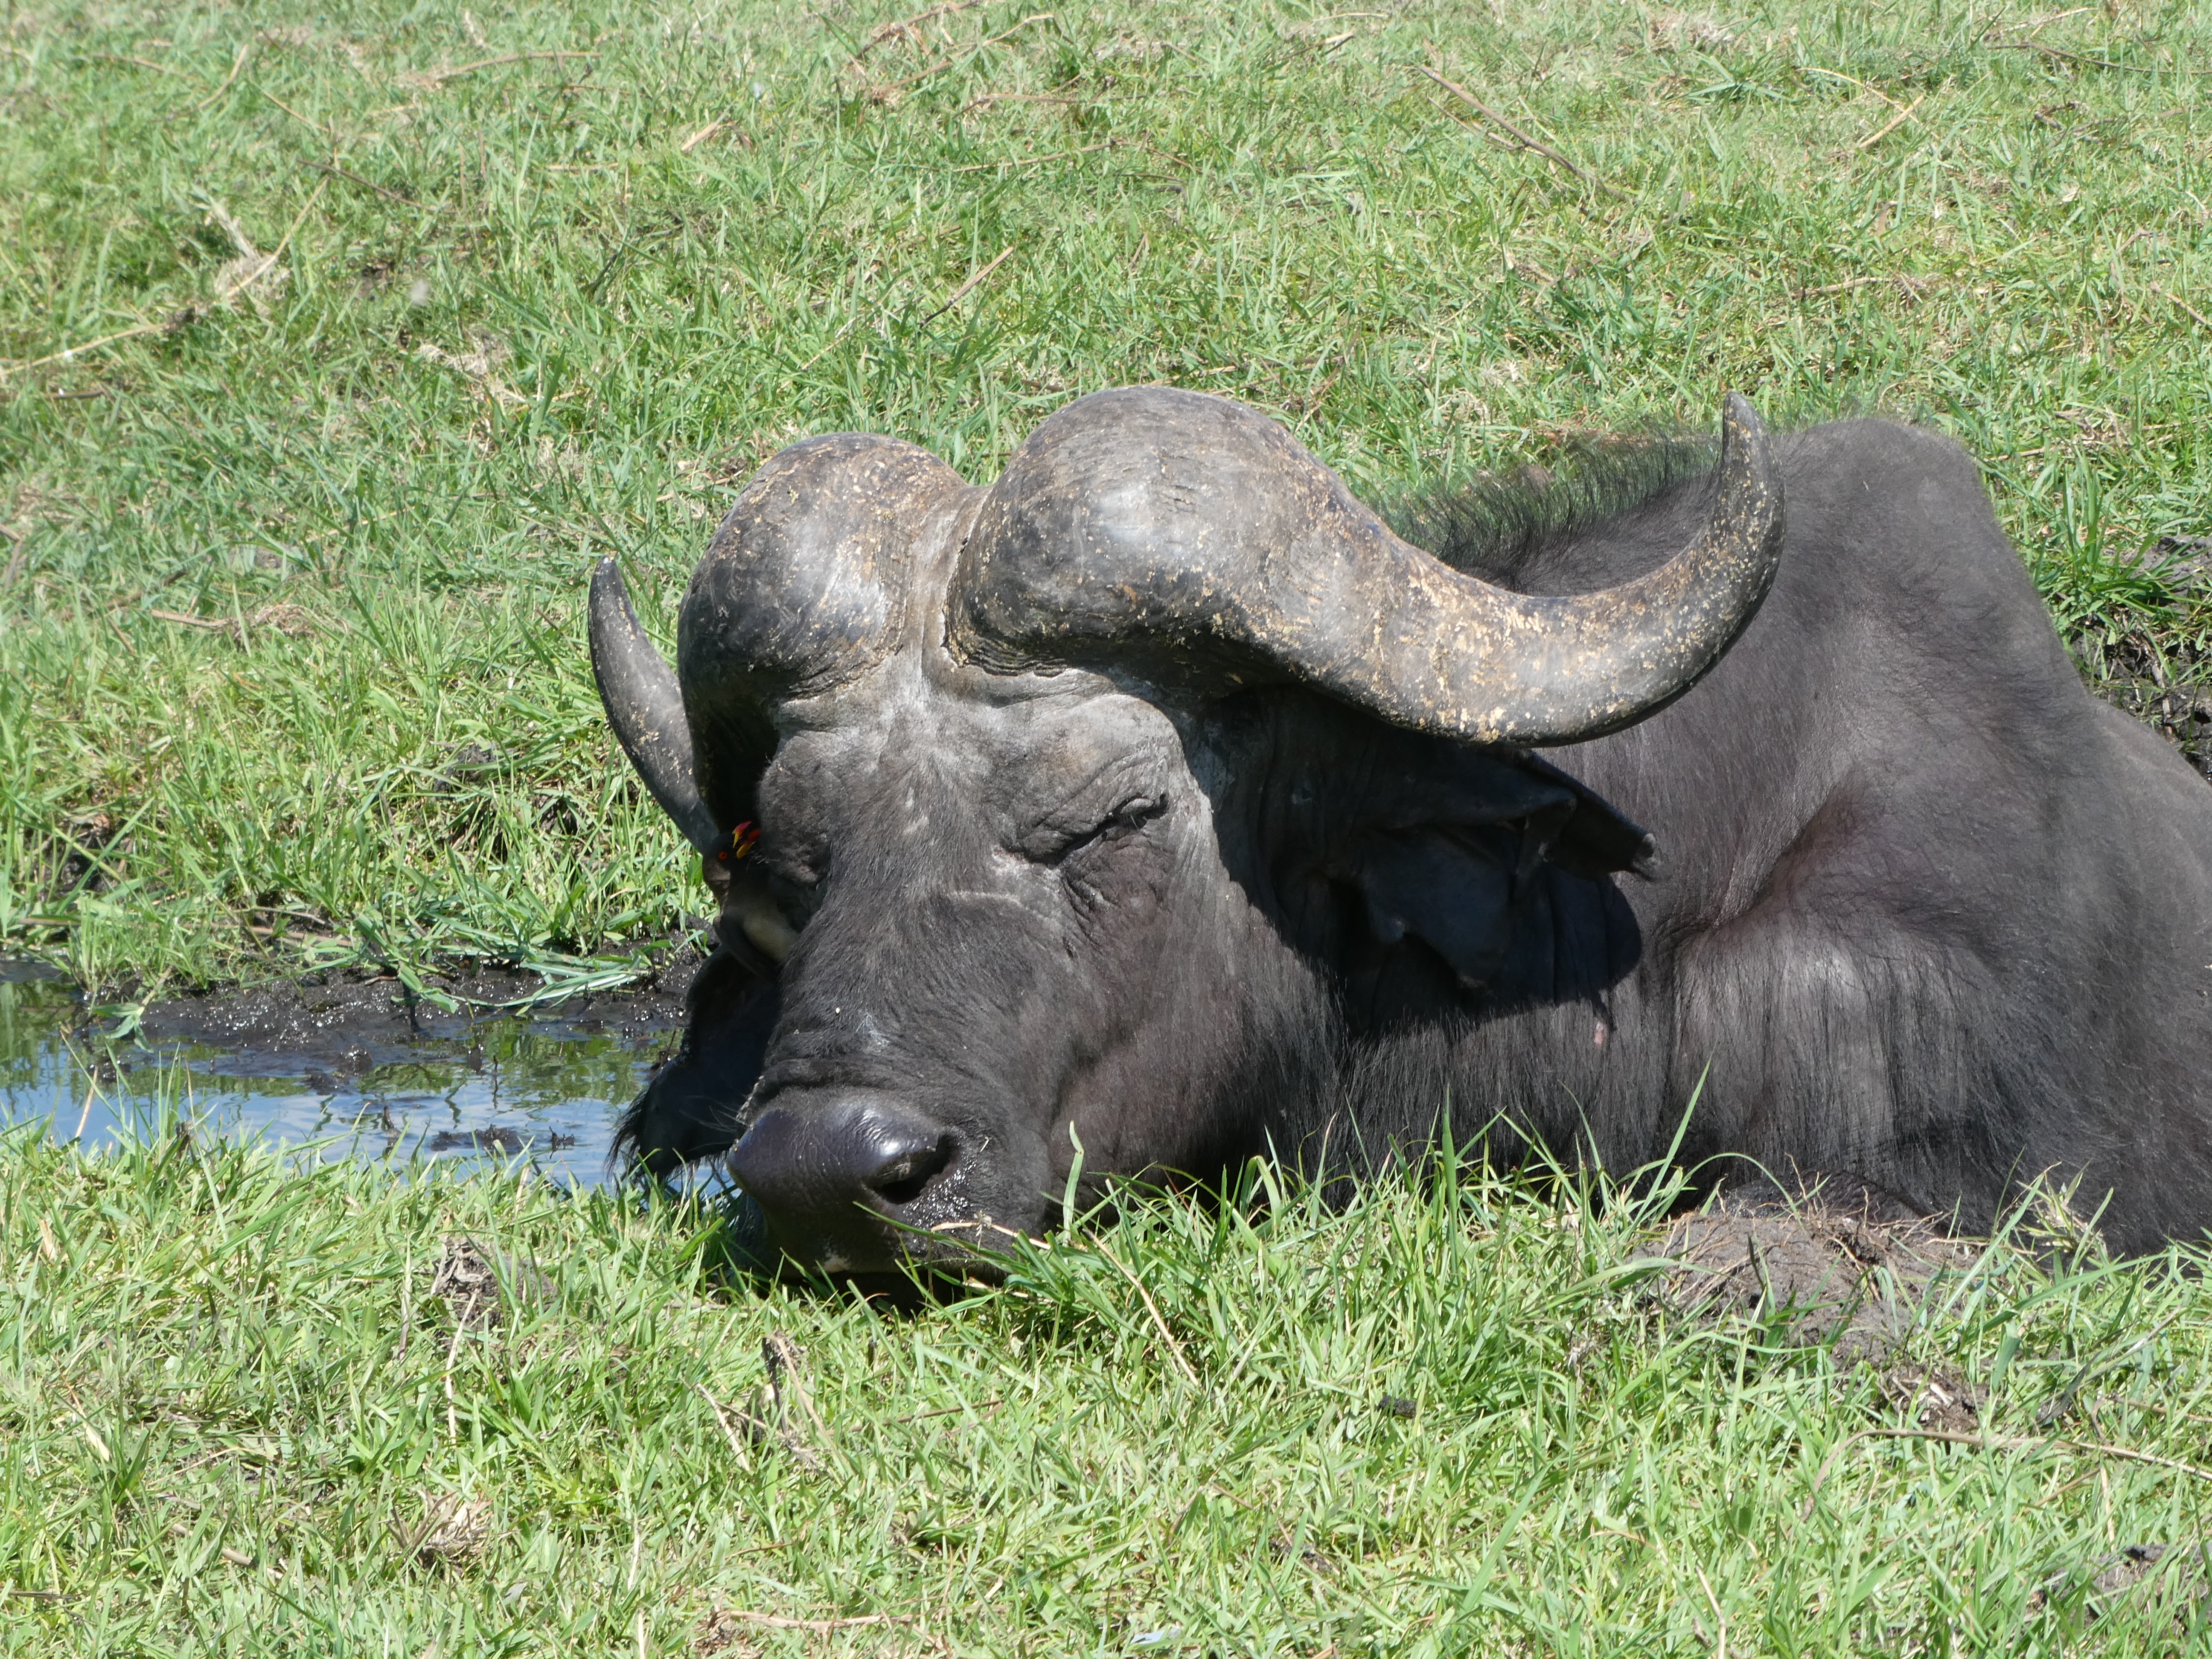 Water buffalo in the Chobe river, Botswana